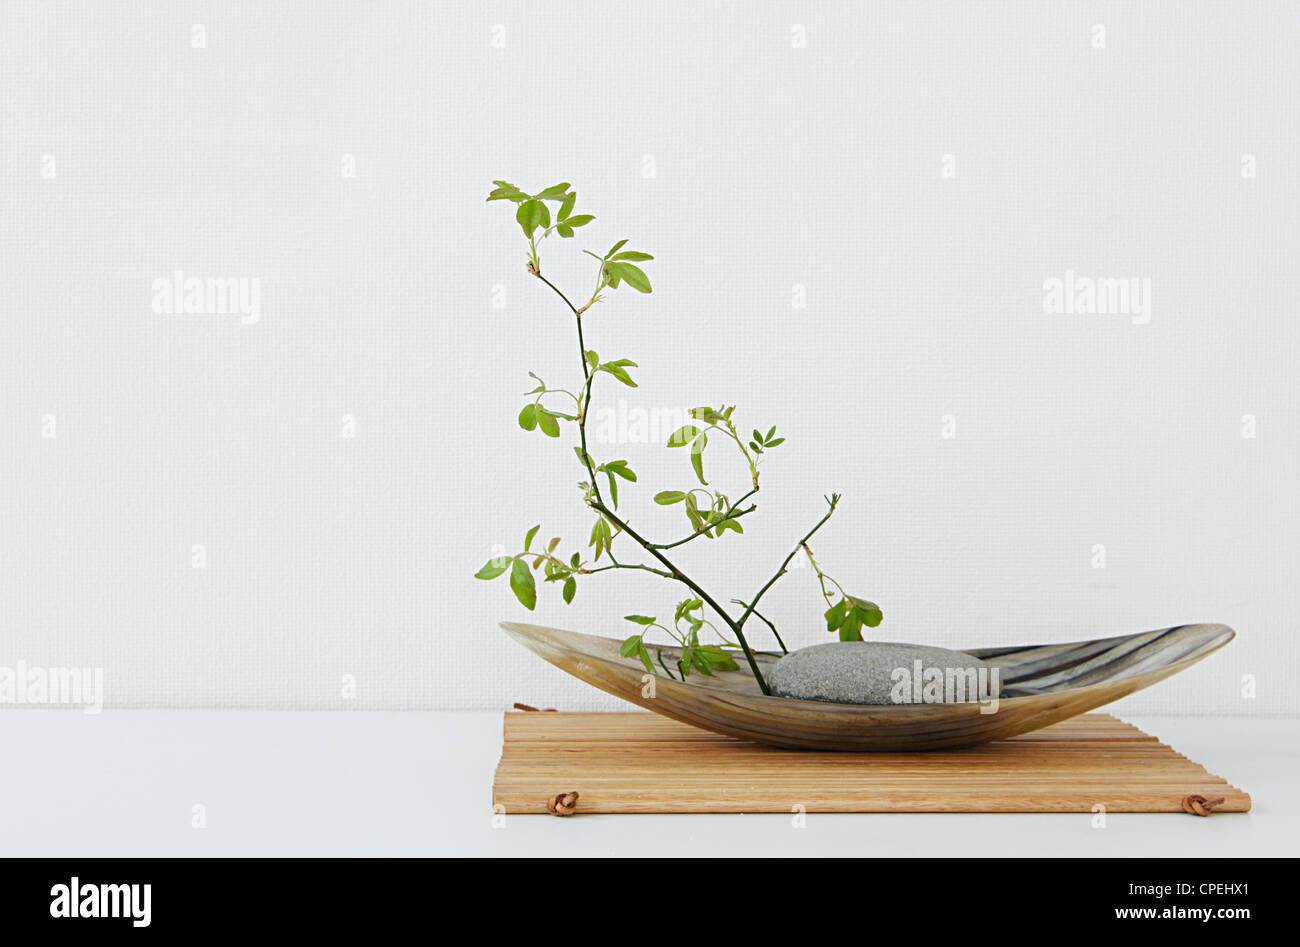 Plant In Decorative Bowl Stock Photo